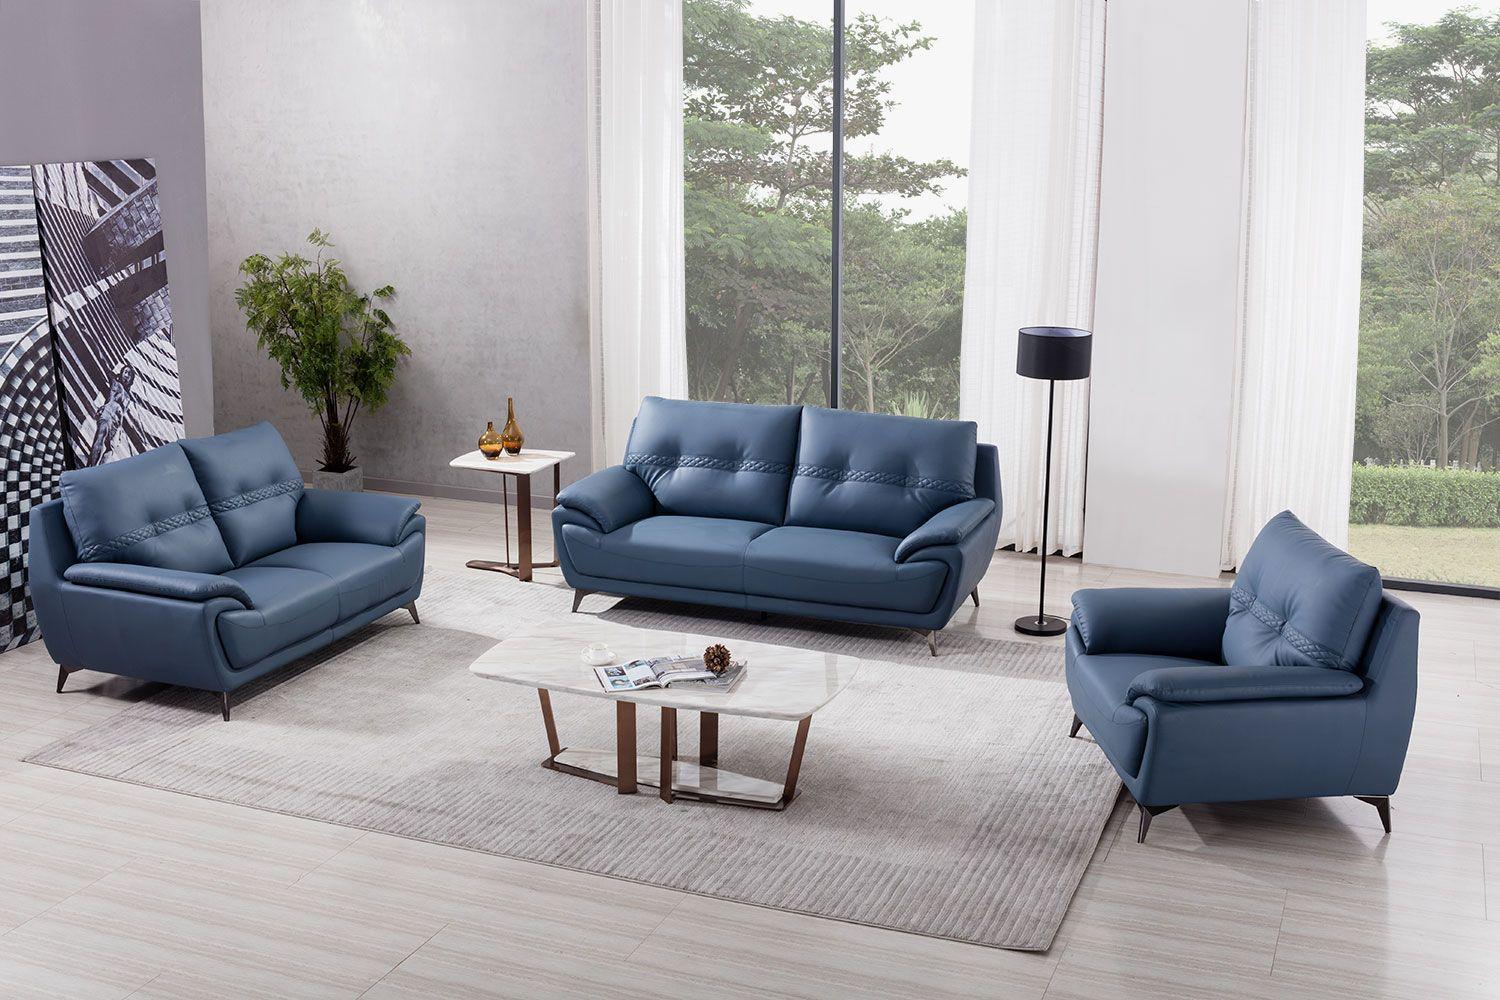 Contemporary, Modern Sofa Set AE628-Blue AE628-Blue-Set-3 in Blue Microfiber